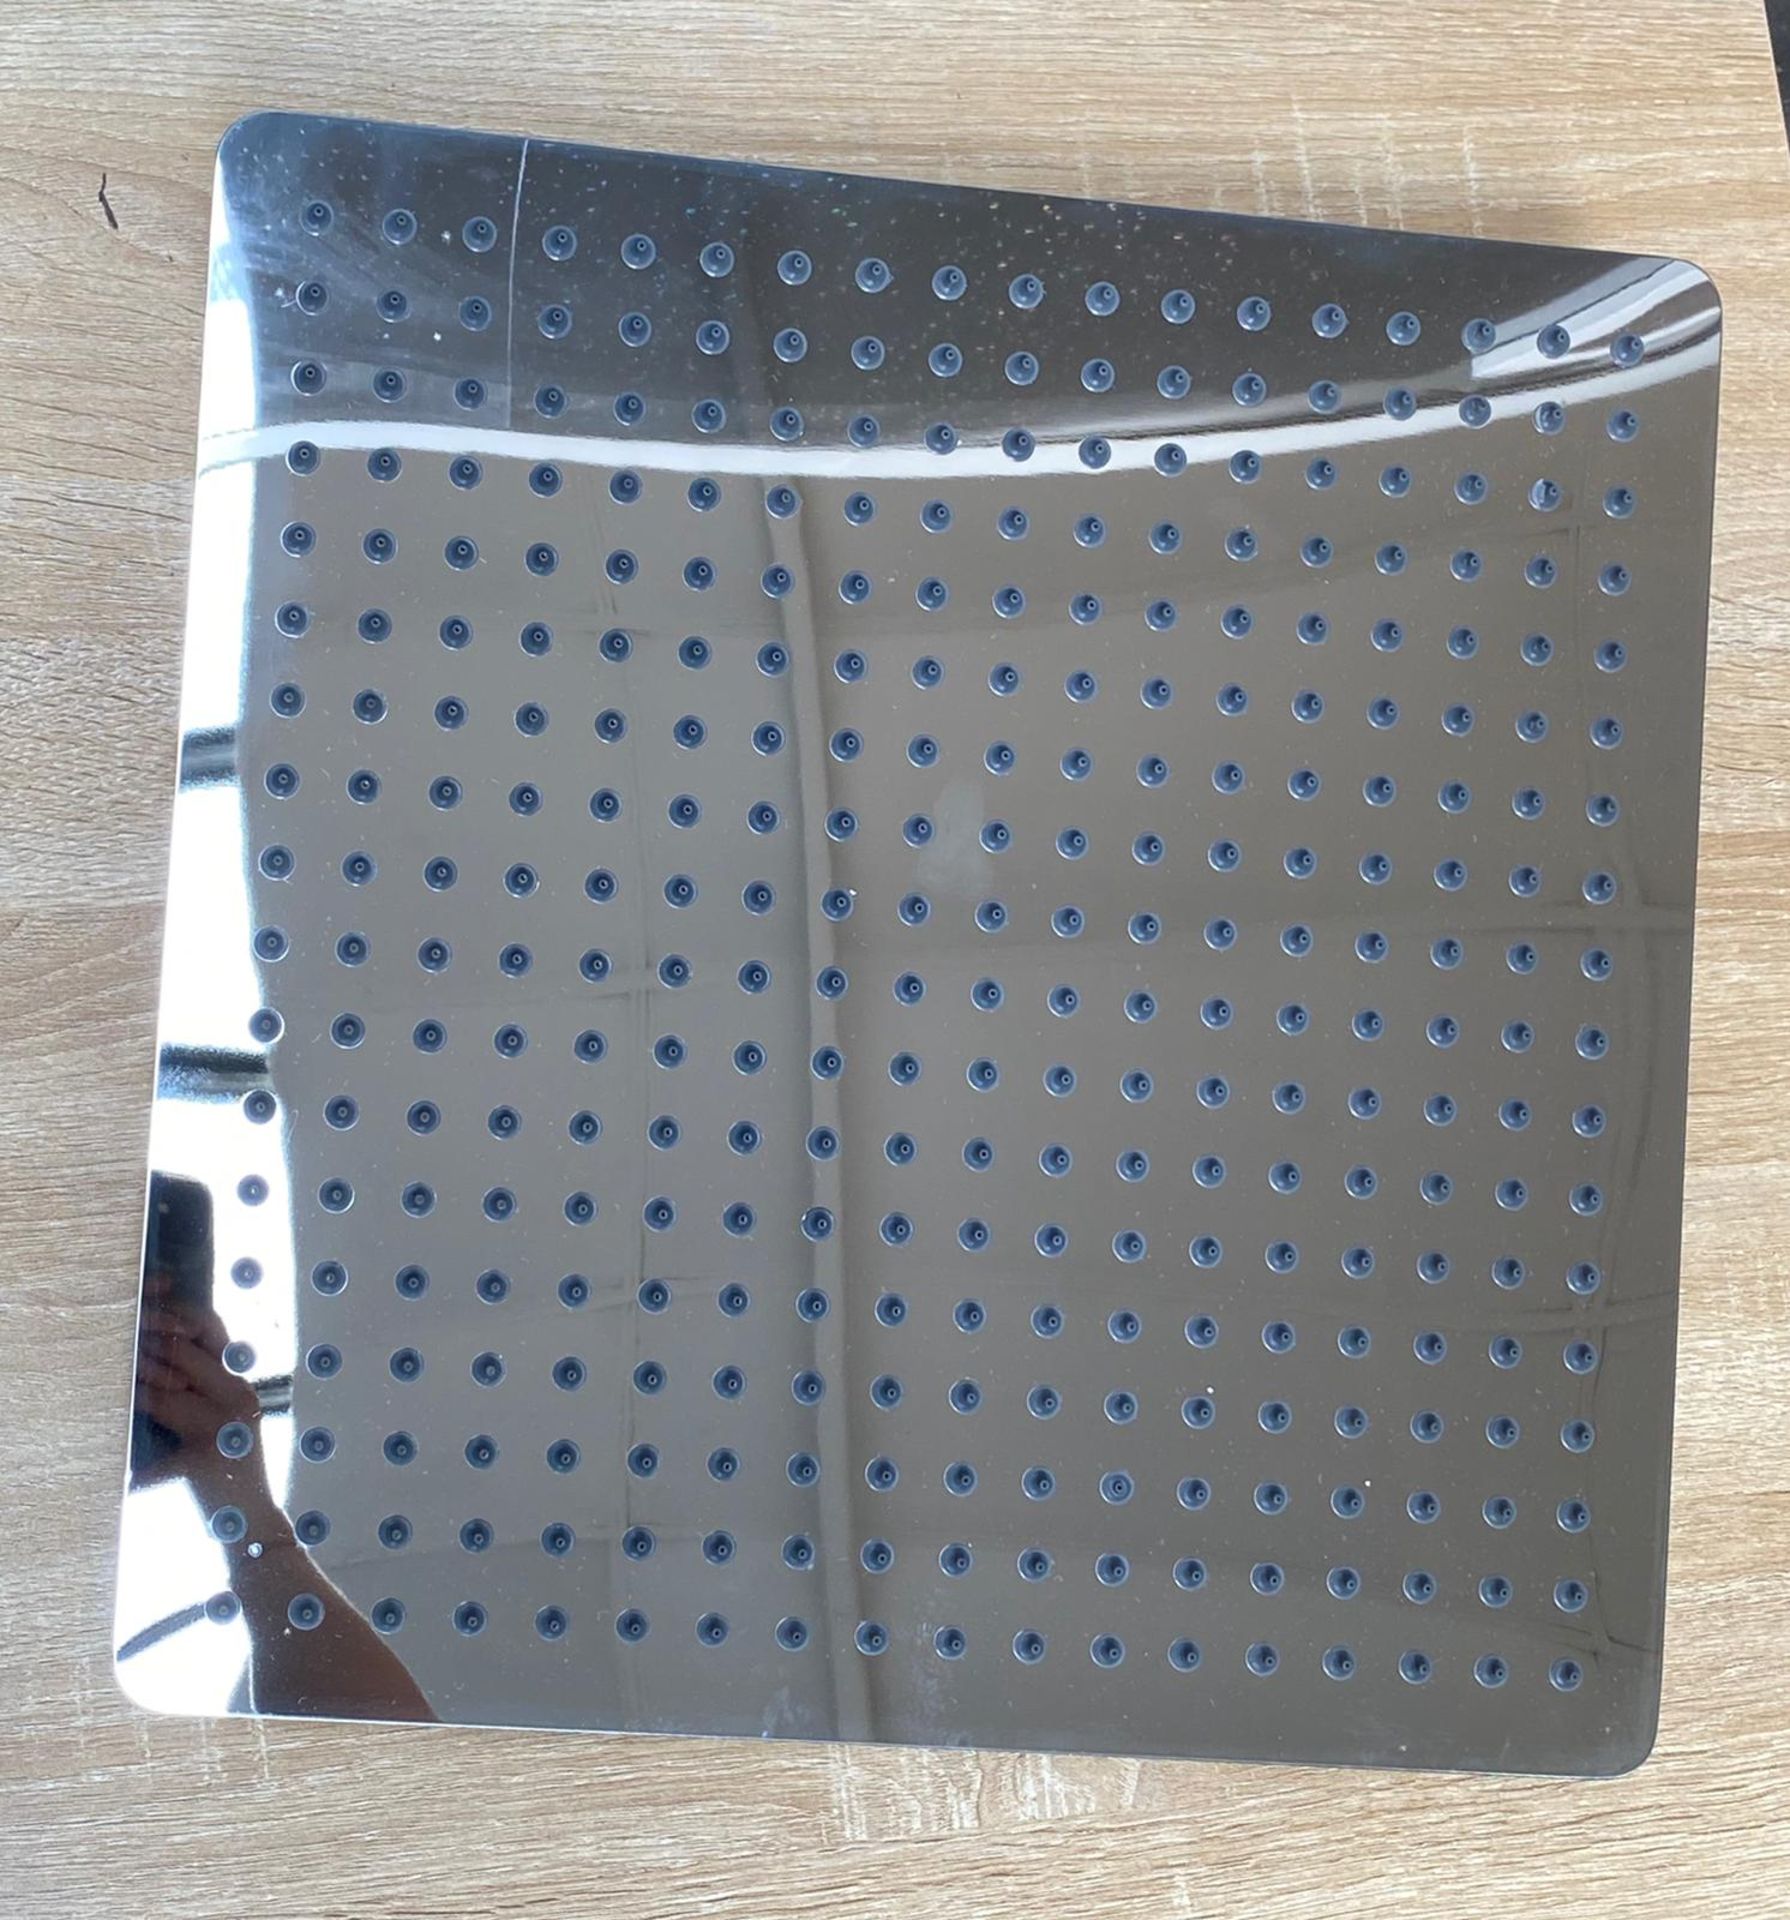 1 x Square Ultra Thin Shower Head (400mm) - New Boxed Stock - Location: Altrincham WA14 - - Image 2 of 4